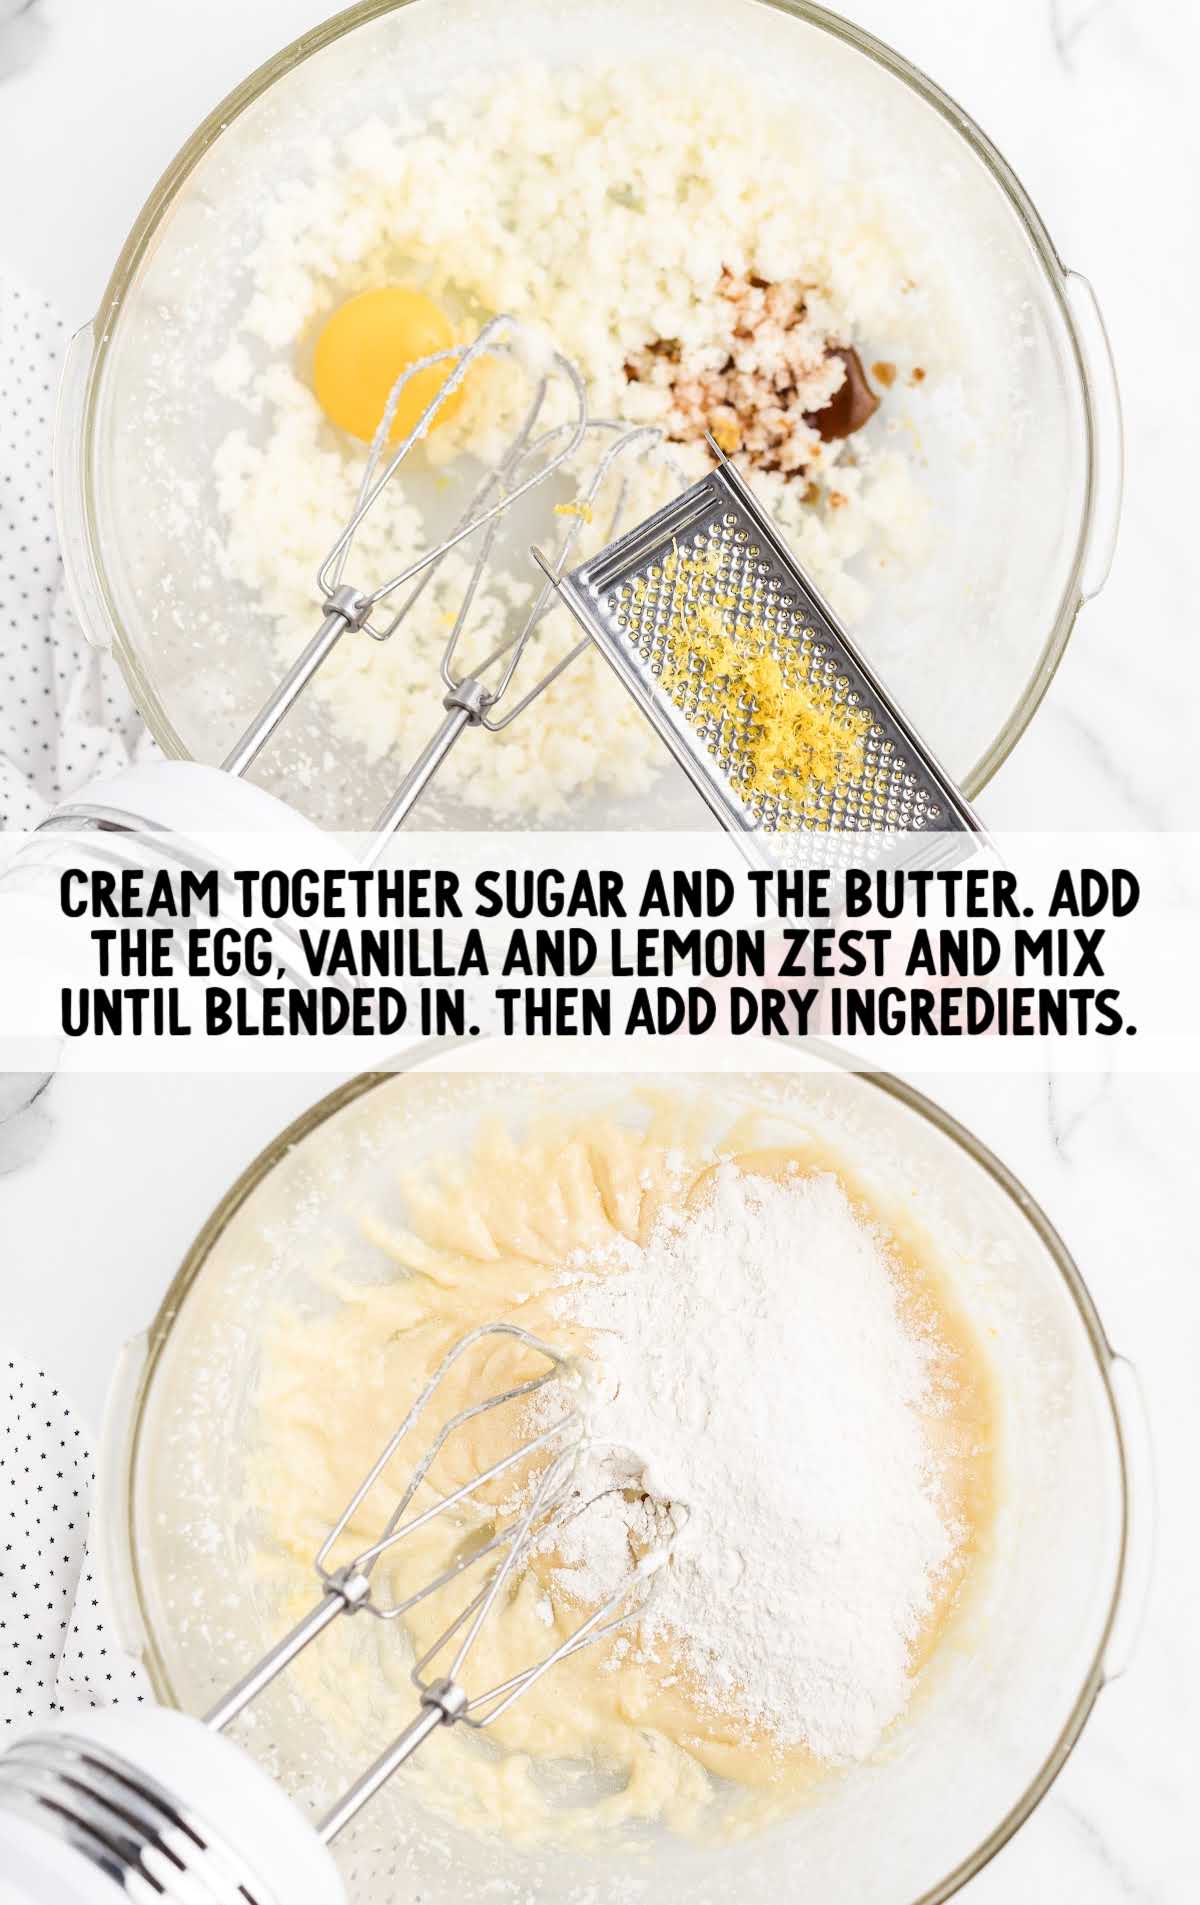 butter, sugar, eggs, vanilla, milk, lemon zest mixed together in a bowl